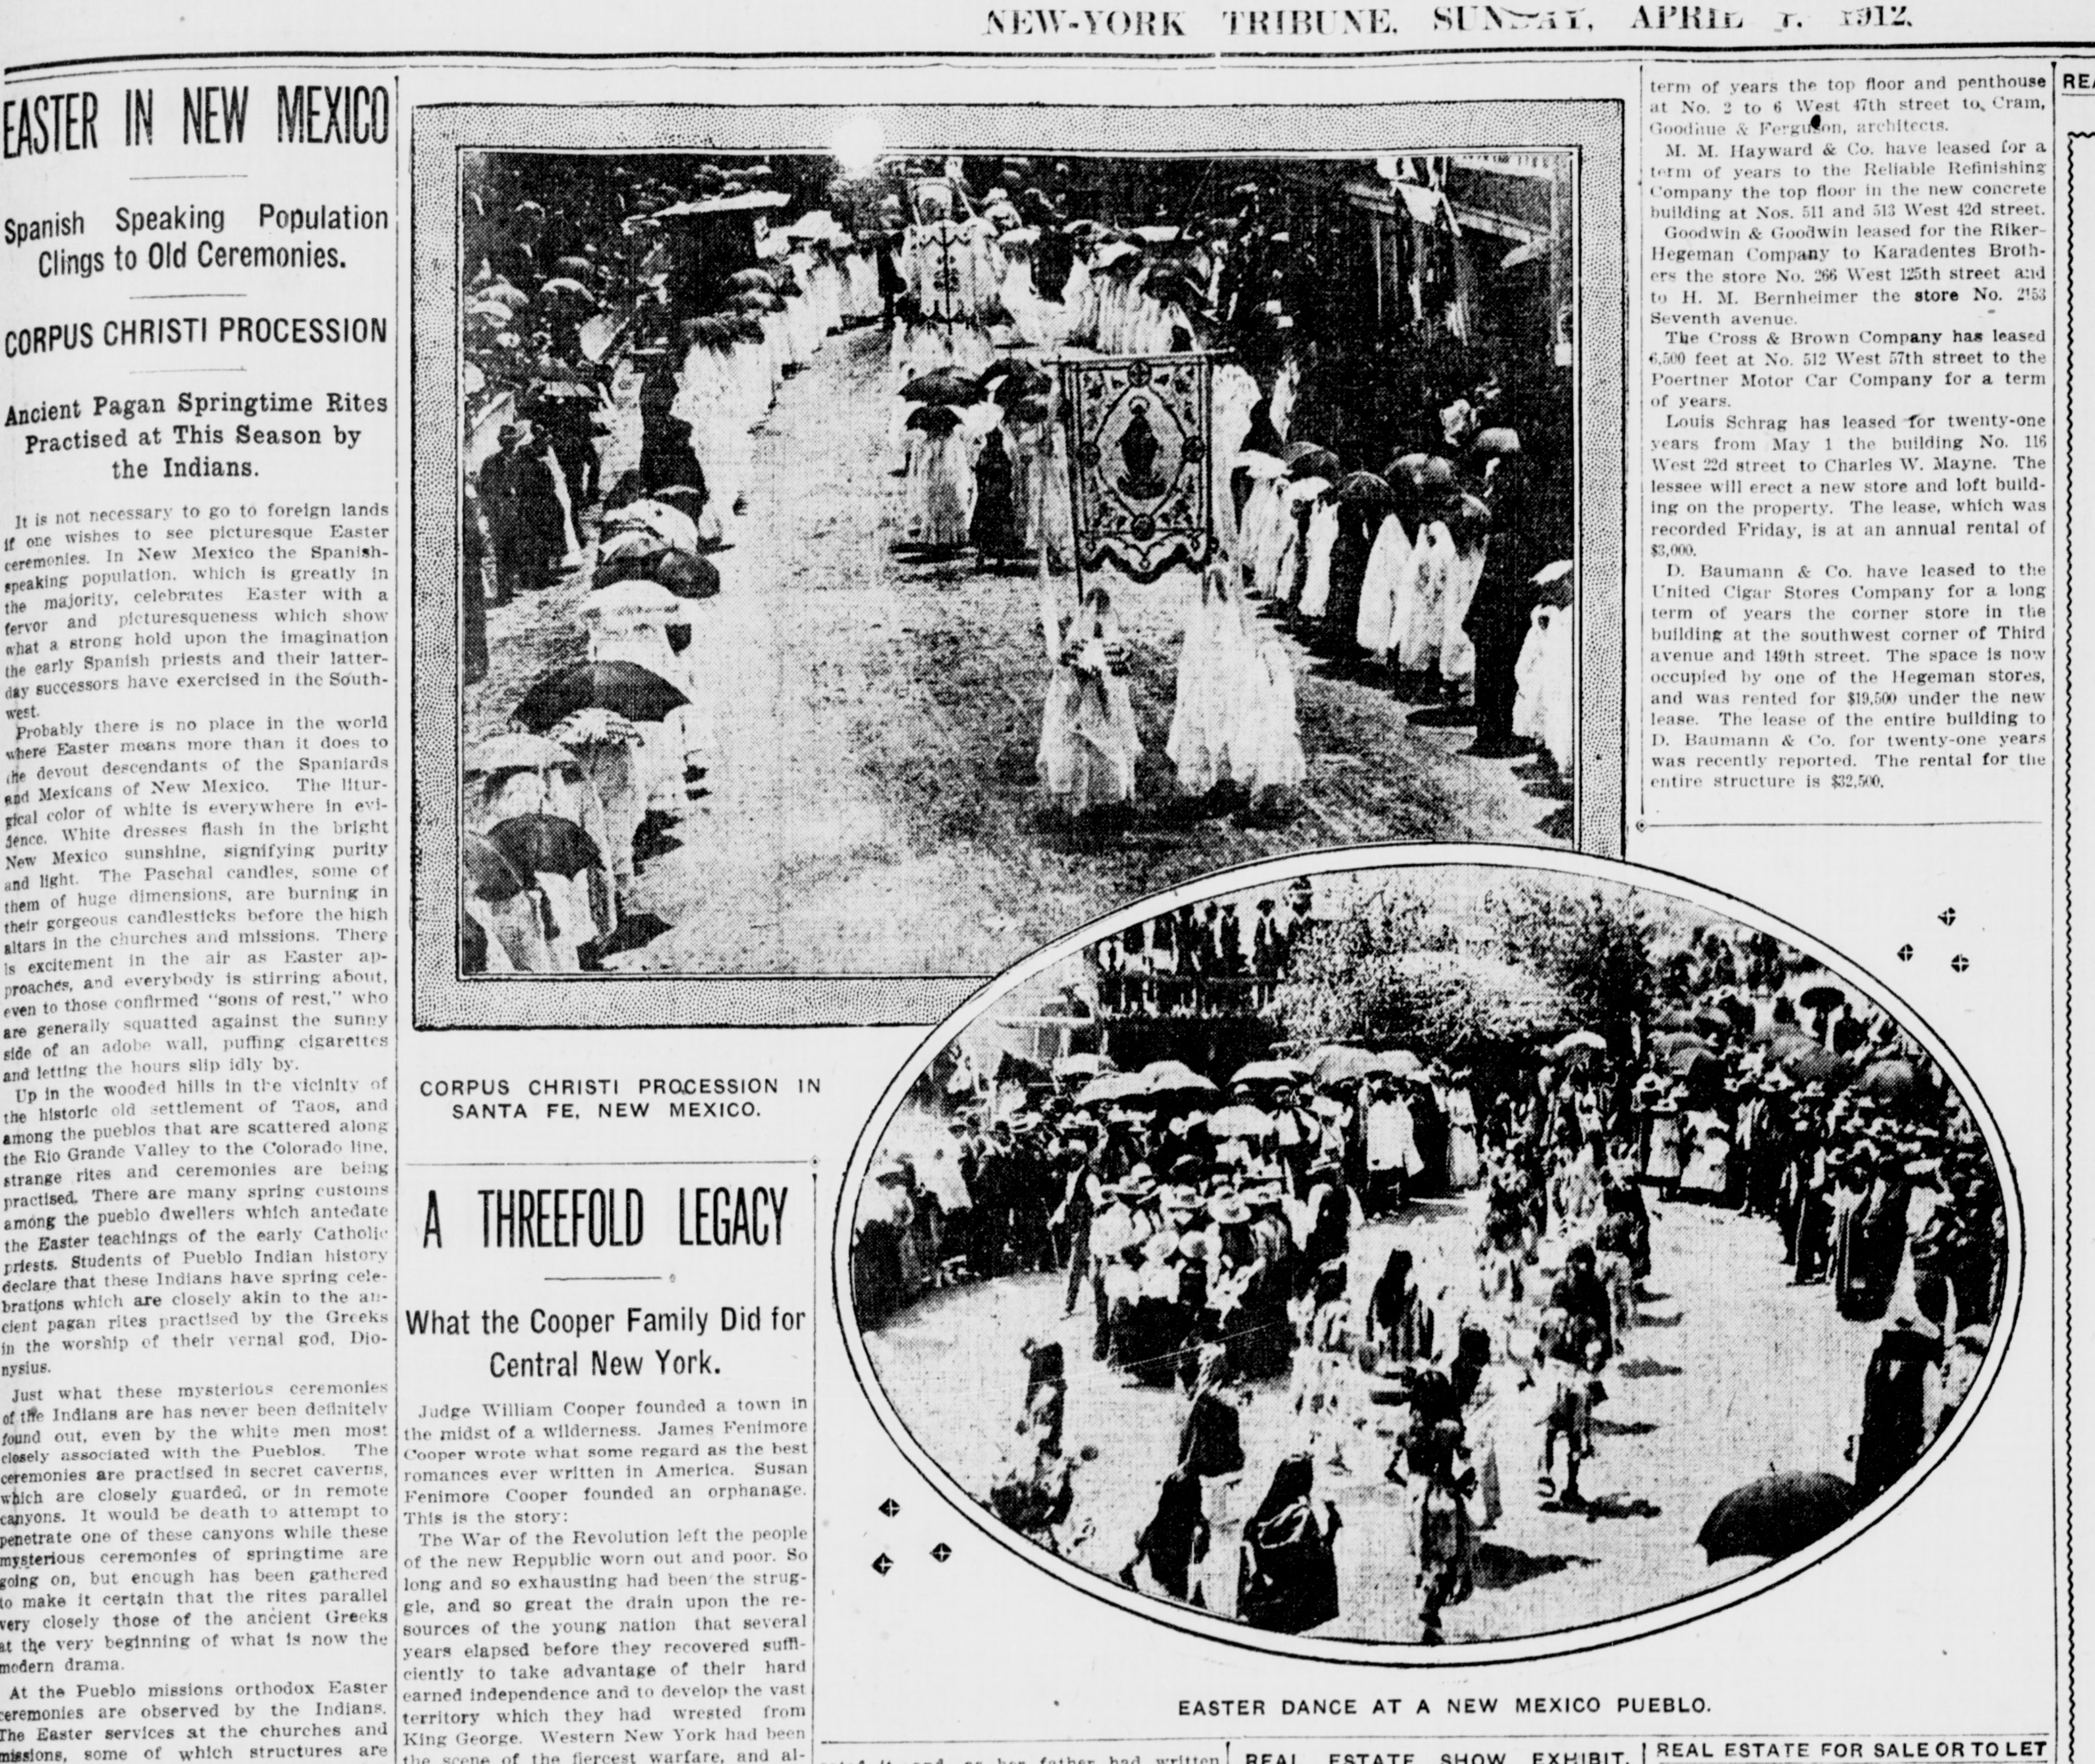 UNITED STATES. New-York tribune. [volume] (New York [N.Y.]), 07 April 1912. Chronicling America: Historic American Newspapers. Lib. of Congress. https://chroniclingamerica.loc.gov/lccn/sn83030214/1912-04-07/ed-1/seq-47/